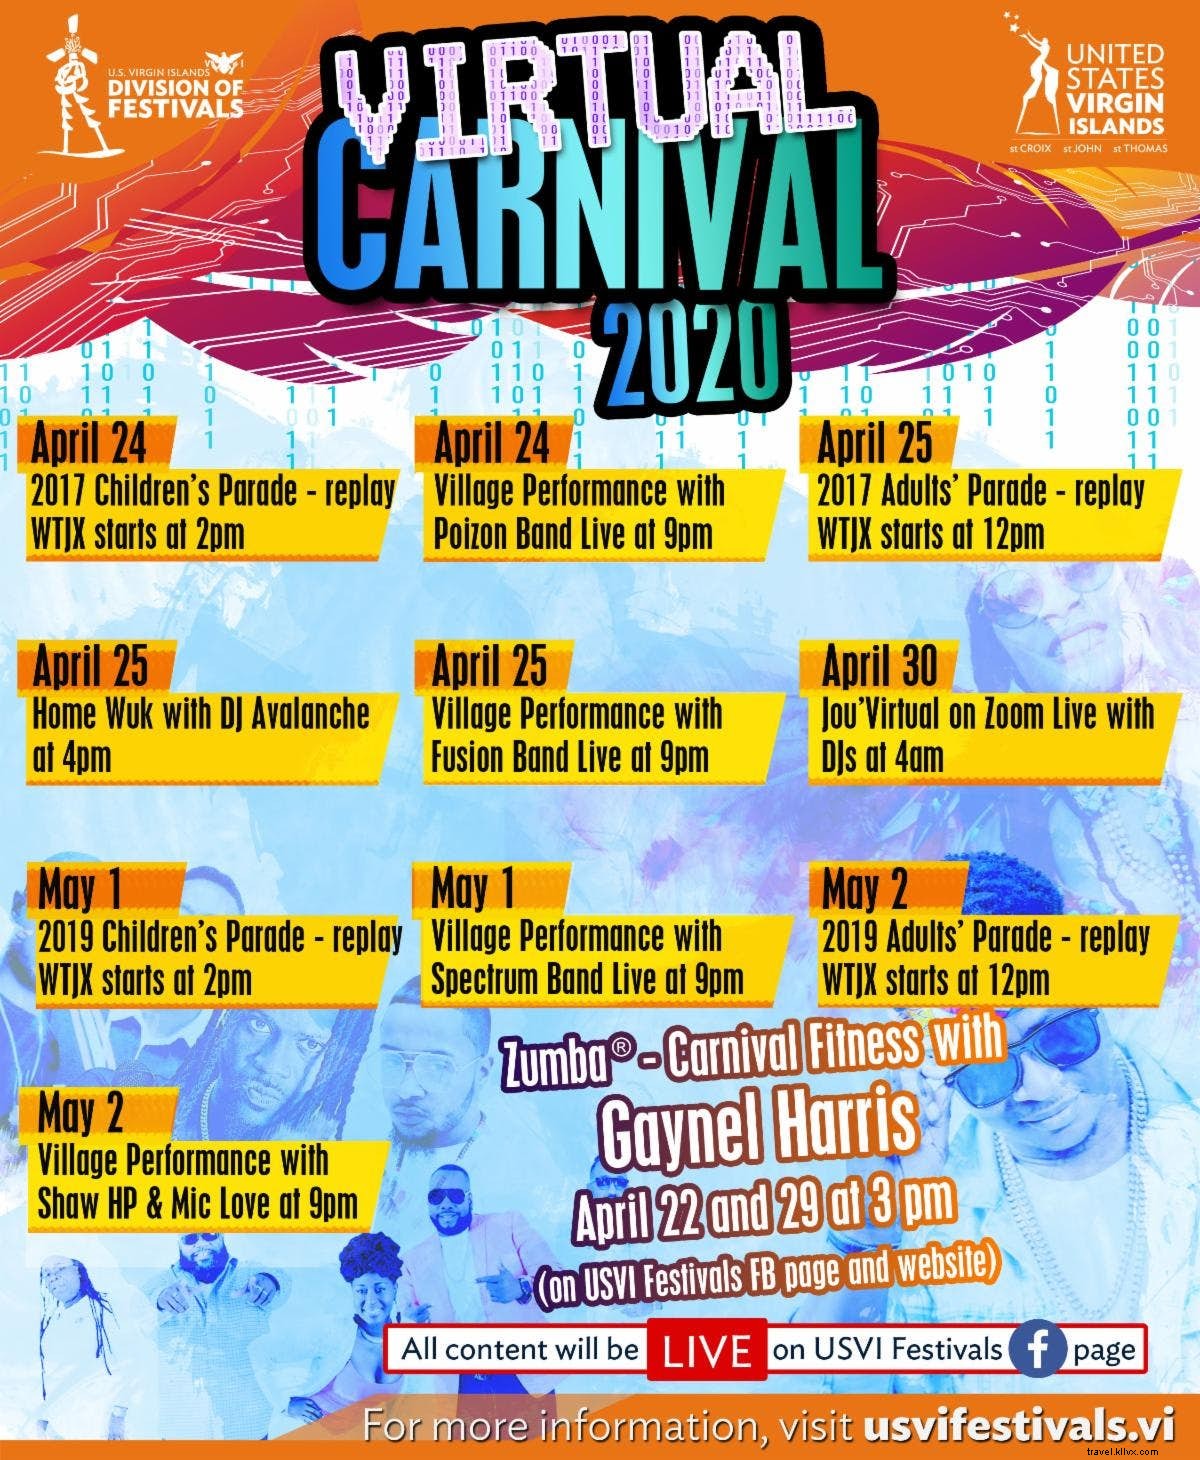 Kepulauan Virgin AS memperluas pengalaman karnaval virtual 